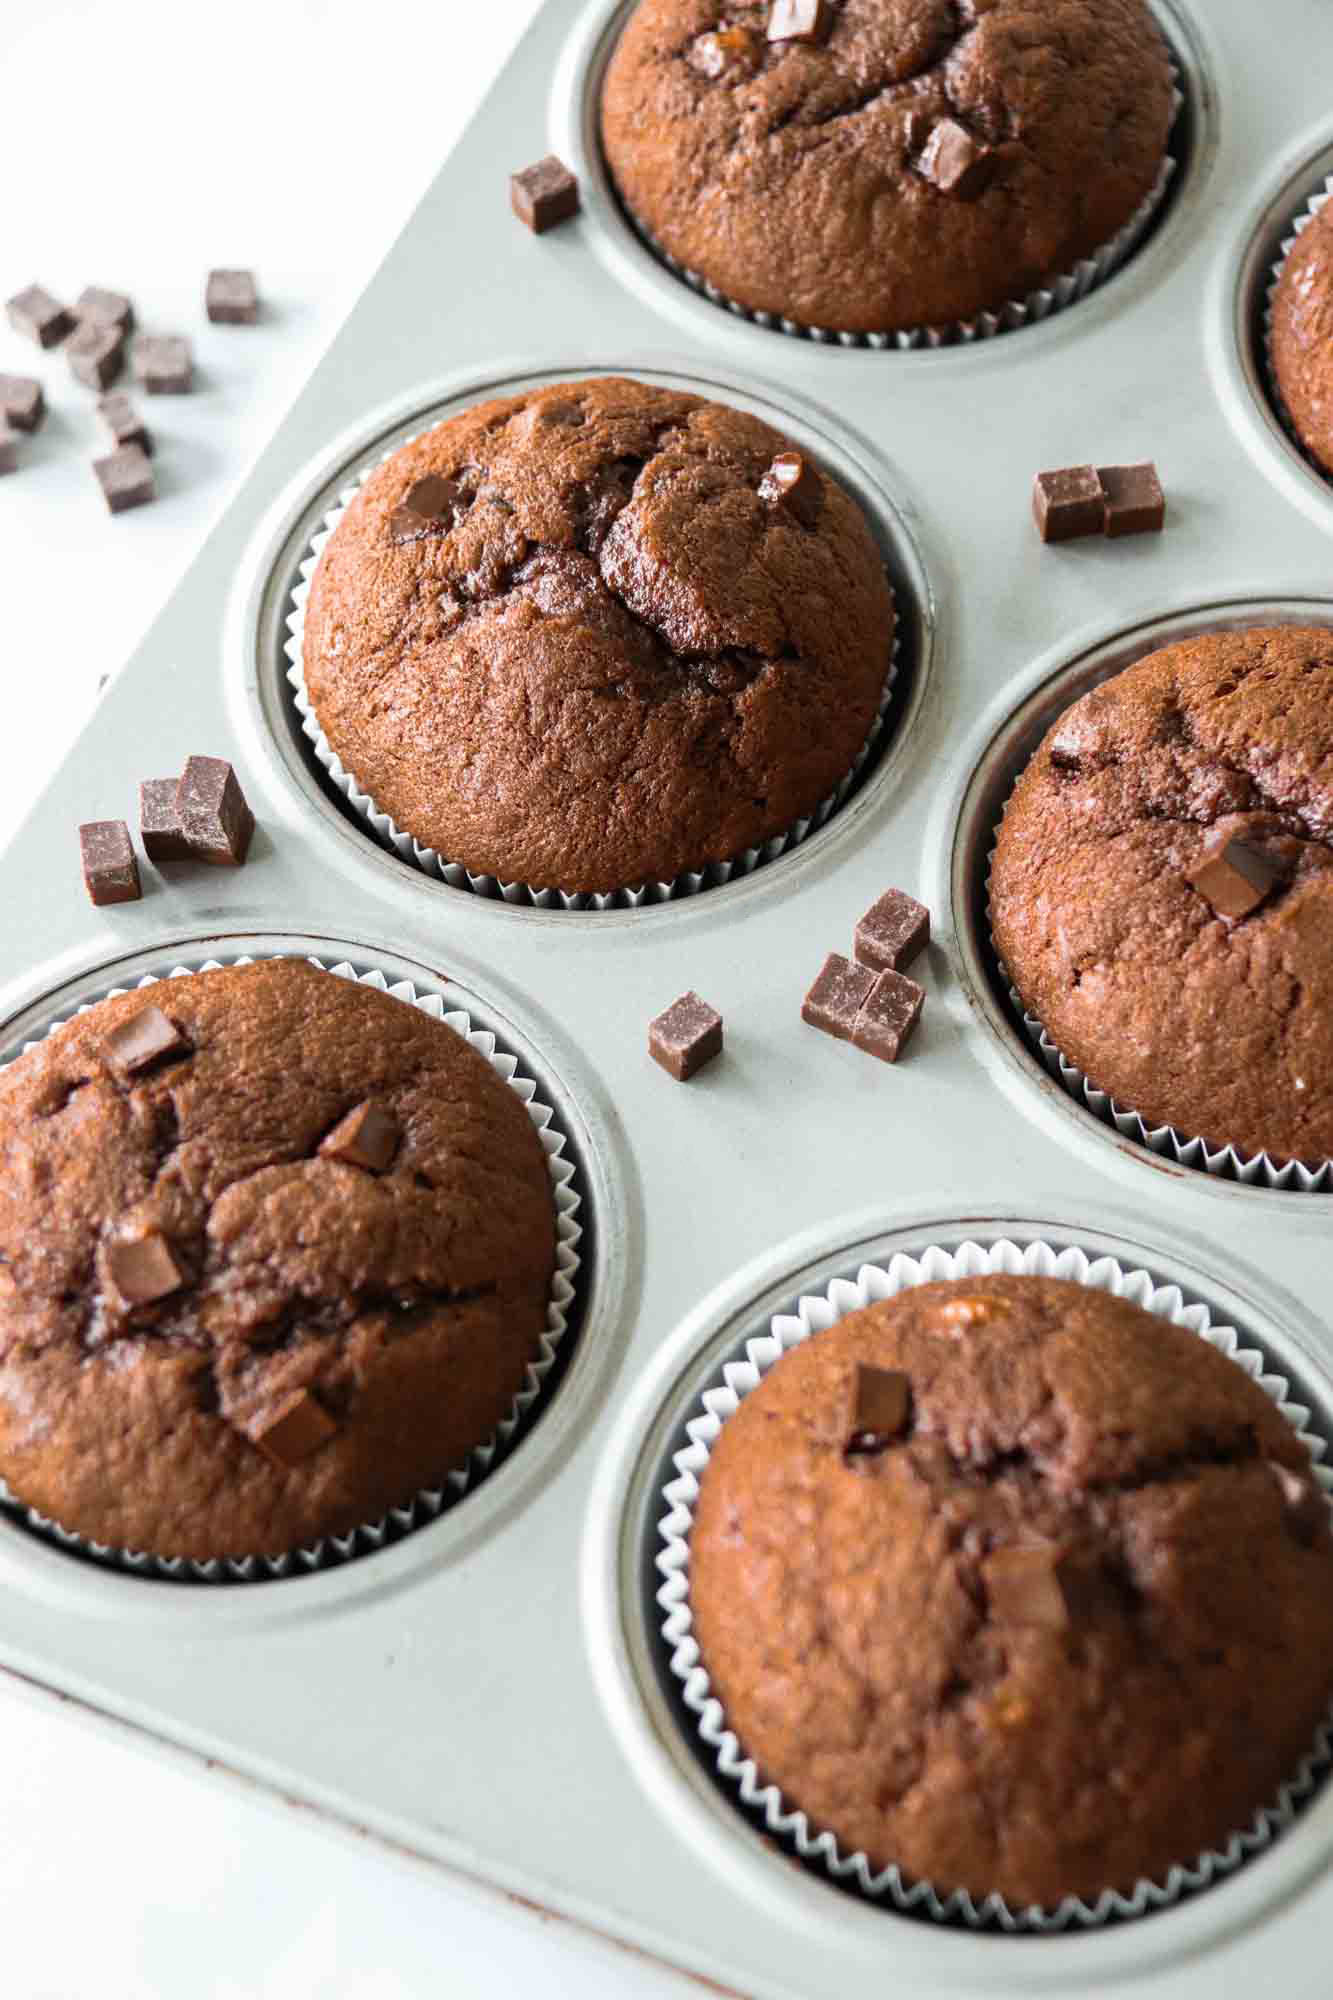 Chocolate banana muffins in a muffin tin with chocolate chunks